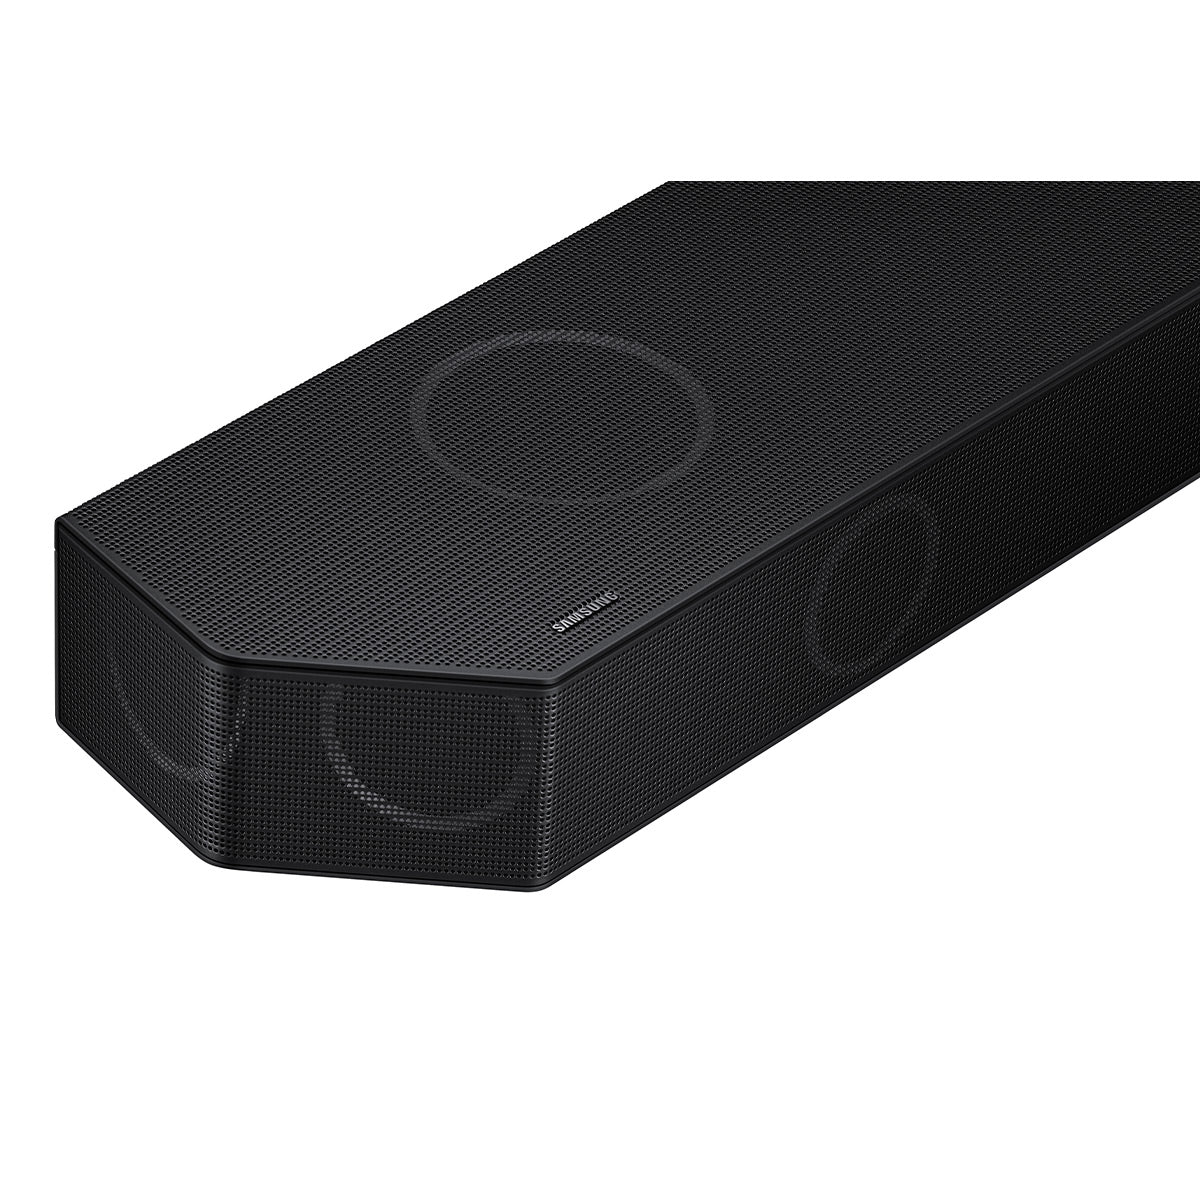 Samsung HW-Q990D 11.1.4-Channel Wireless Dolby Atmos Soundbar with Wireless Surround Speakers & Subwoofer (Black)